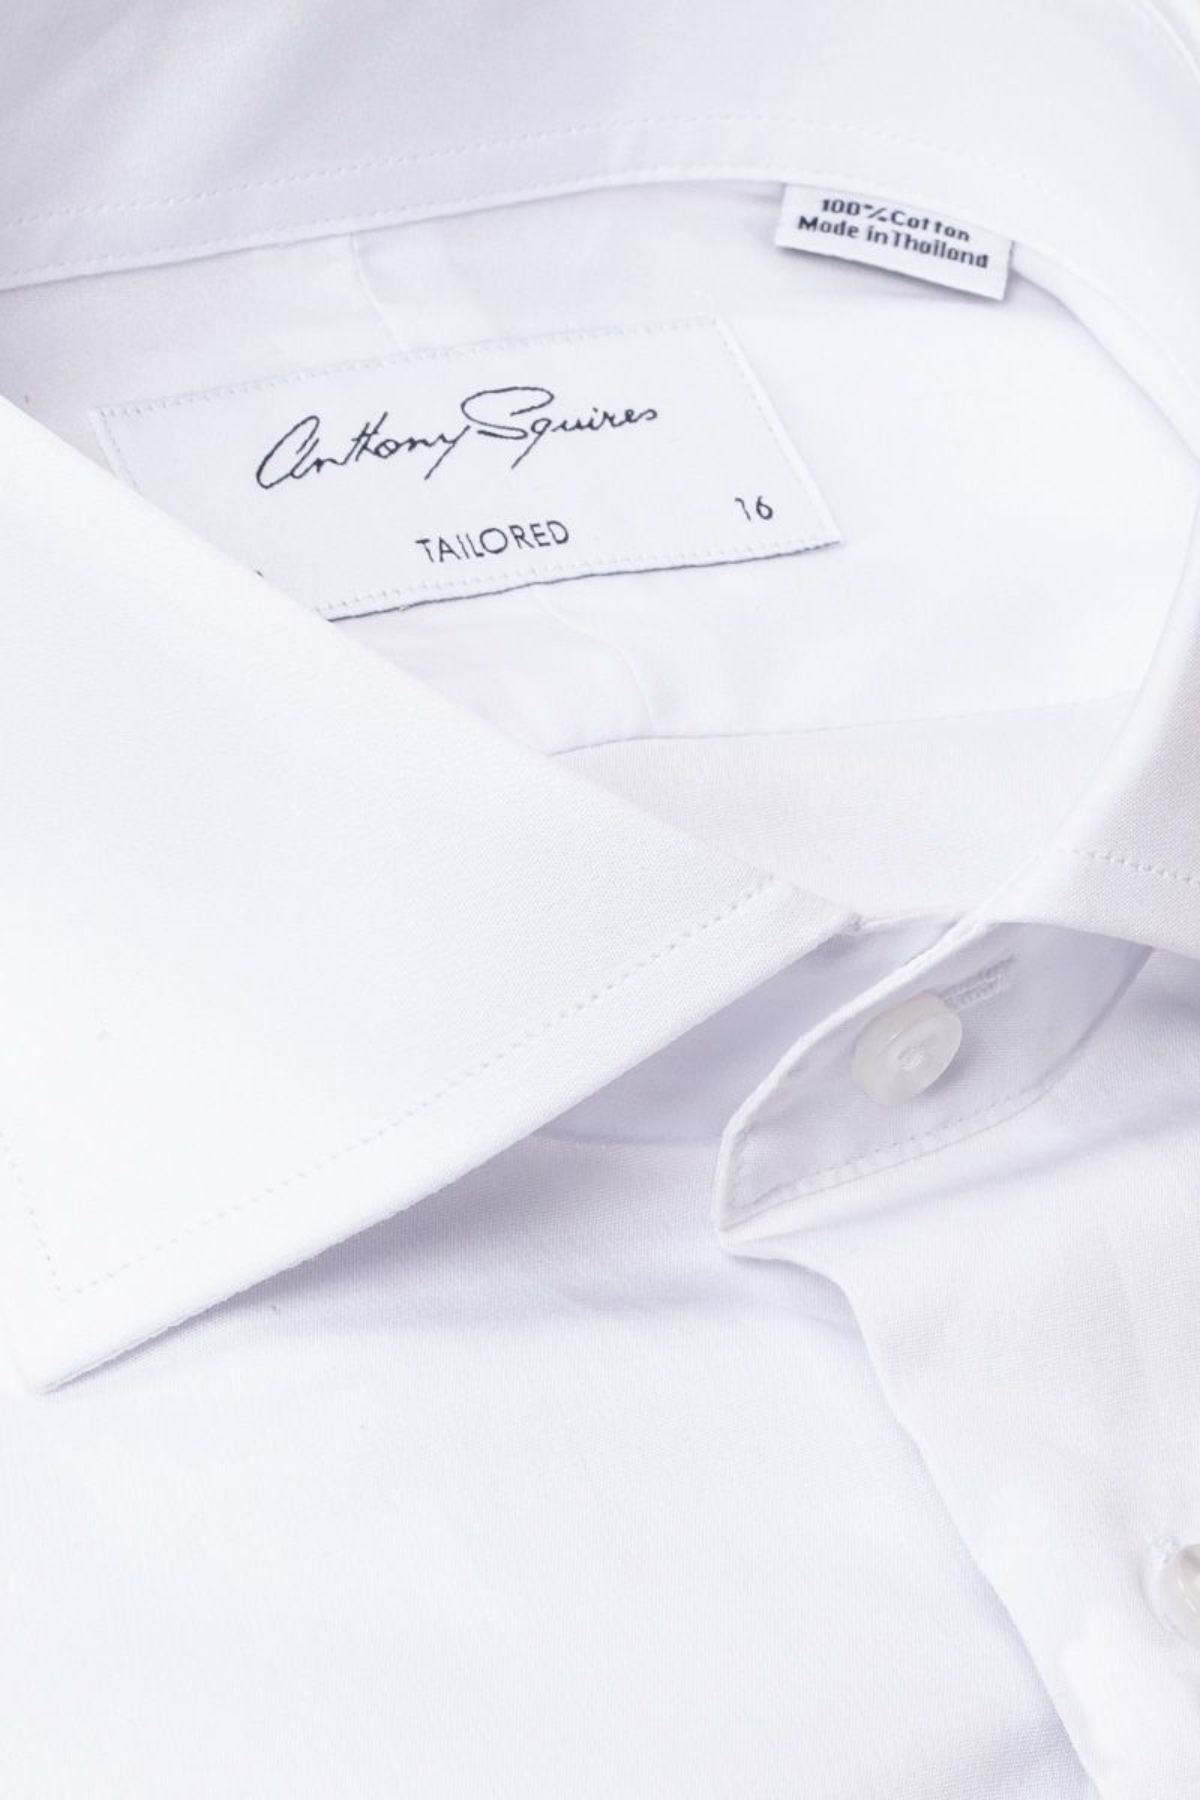 Nigel - White Shirt